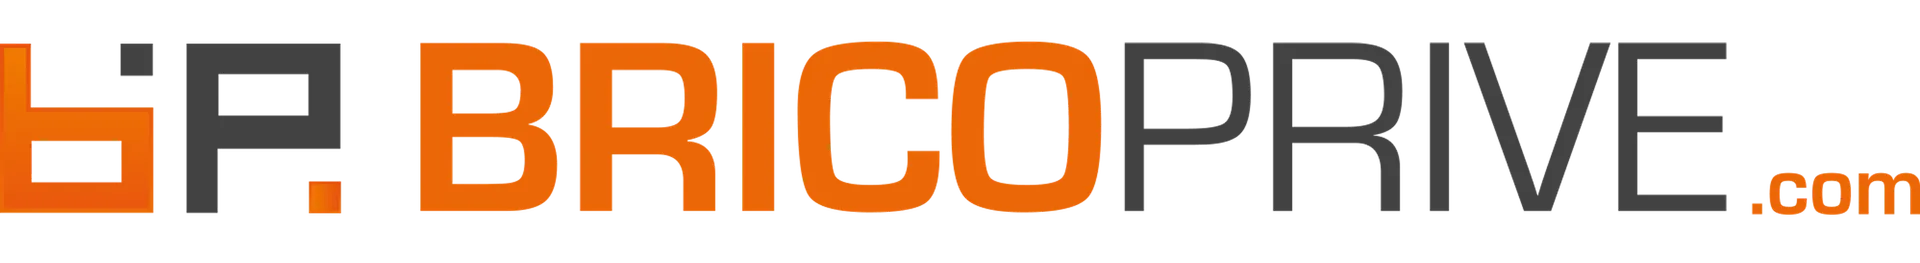 BRICO PRIVEE logo